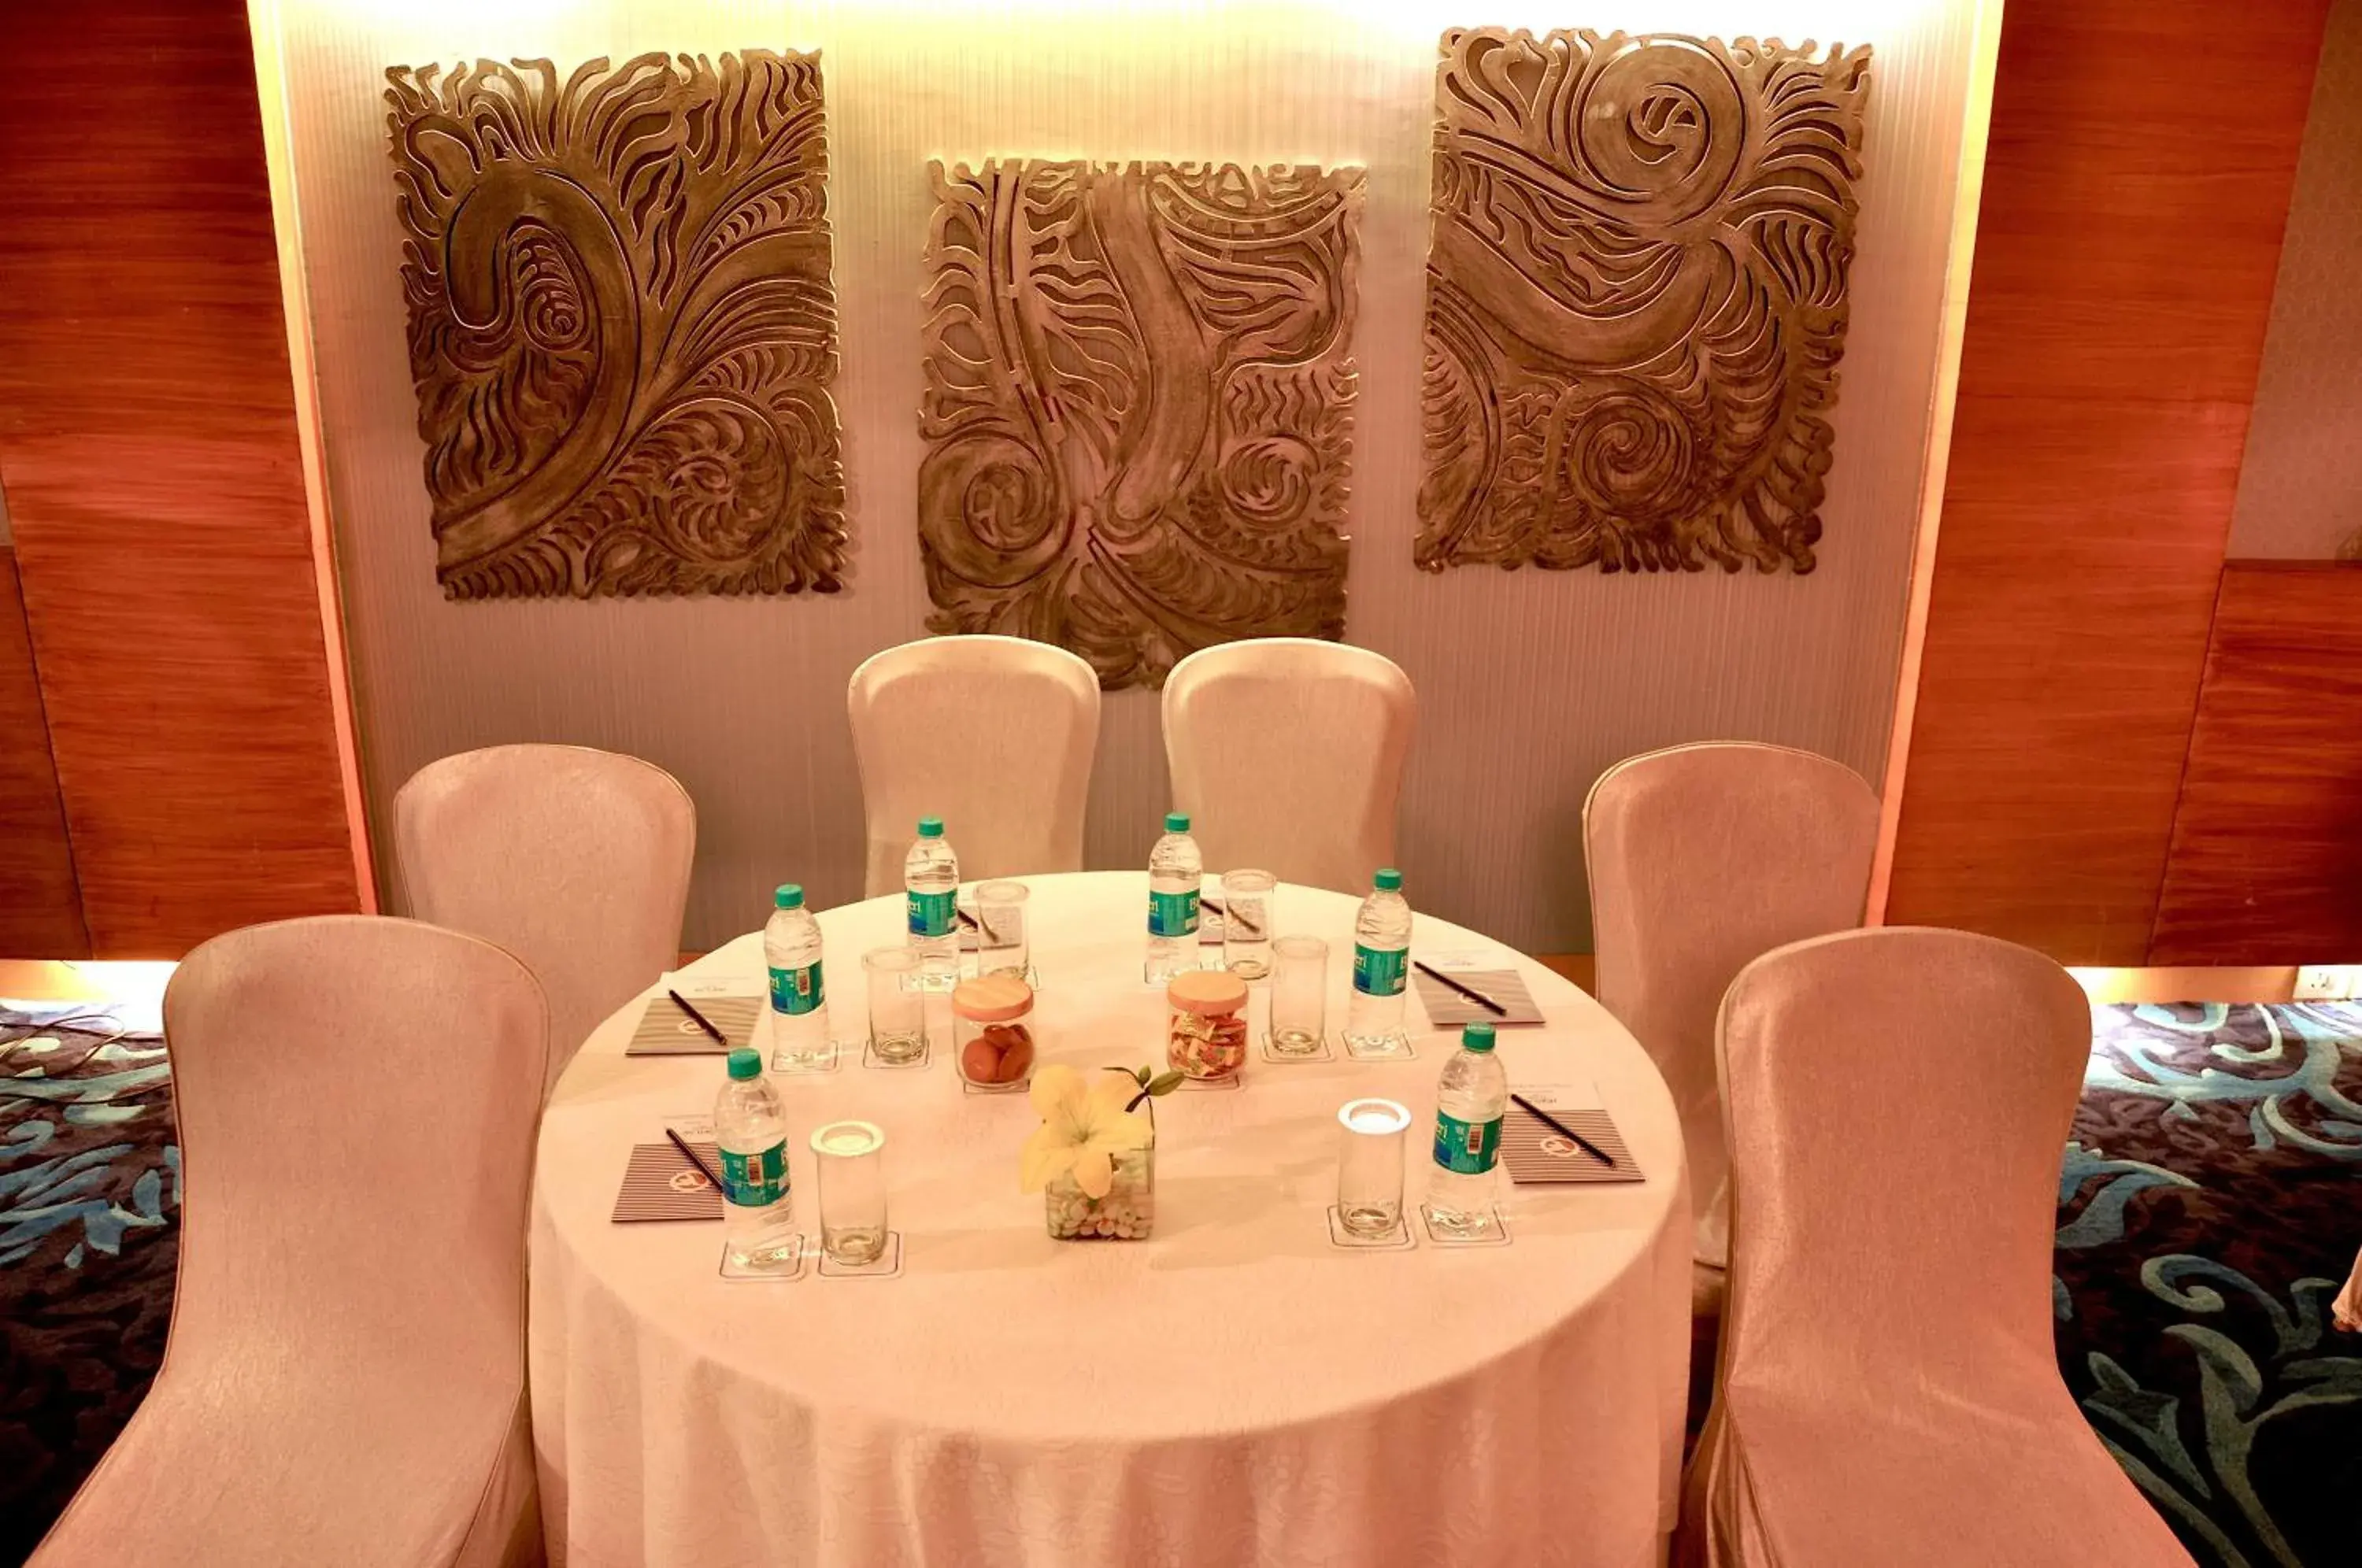 Banquet/Function facilities, Banquet Facilities in Fortune Sector 27 Noida